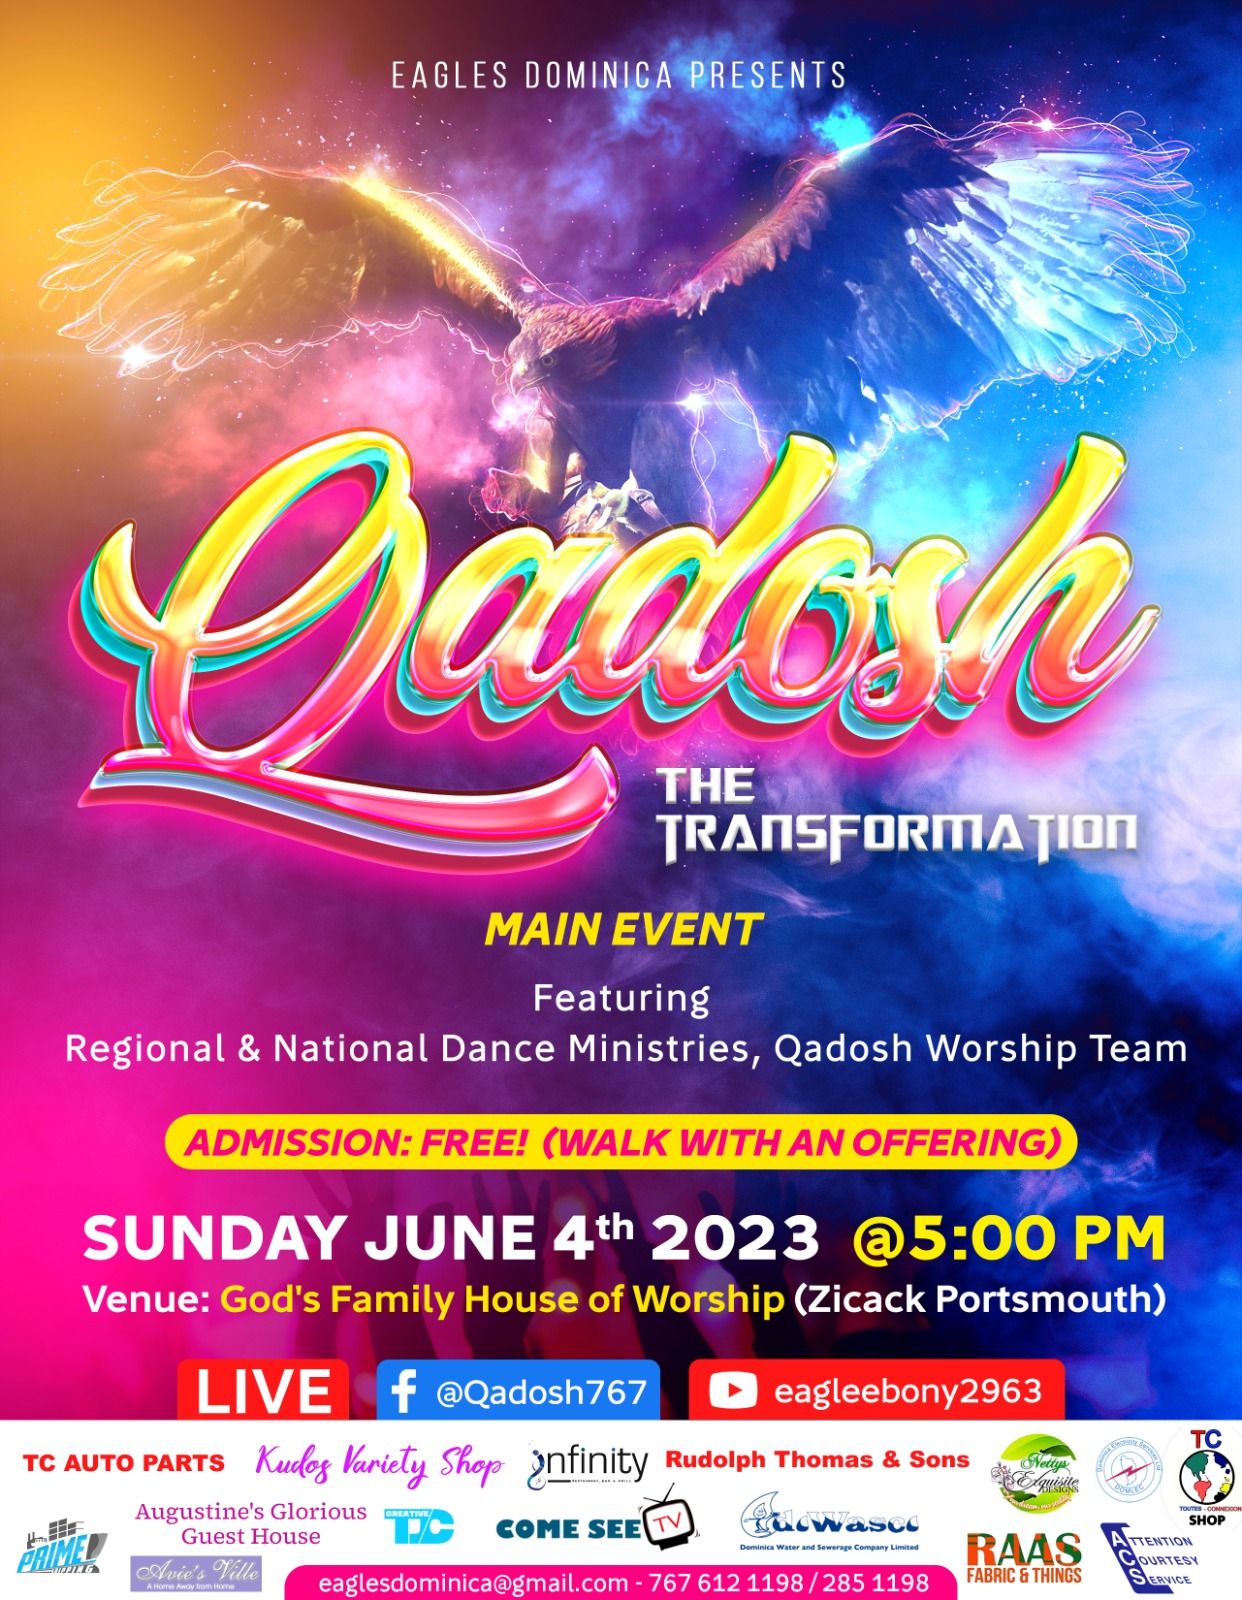 Eagles Dominica presents Qadosh - The Transformation - June 4 2023 Main Event